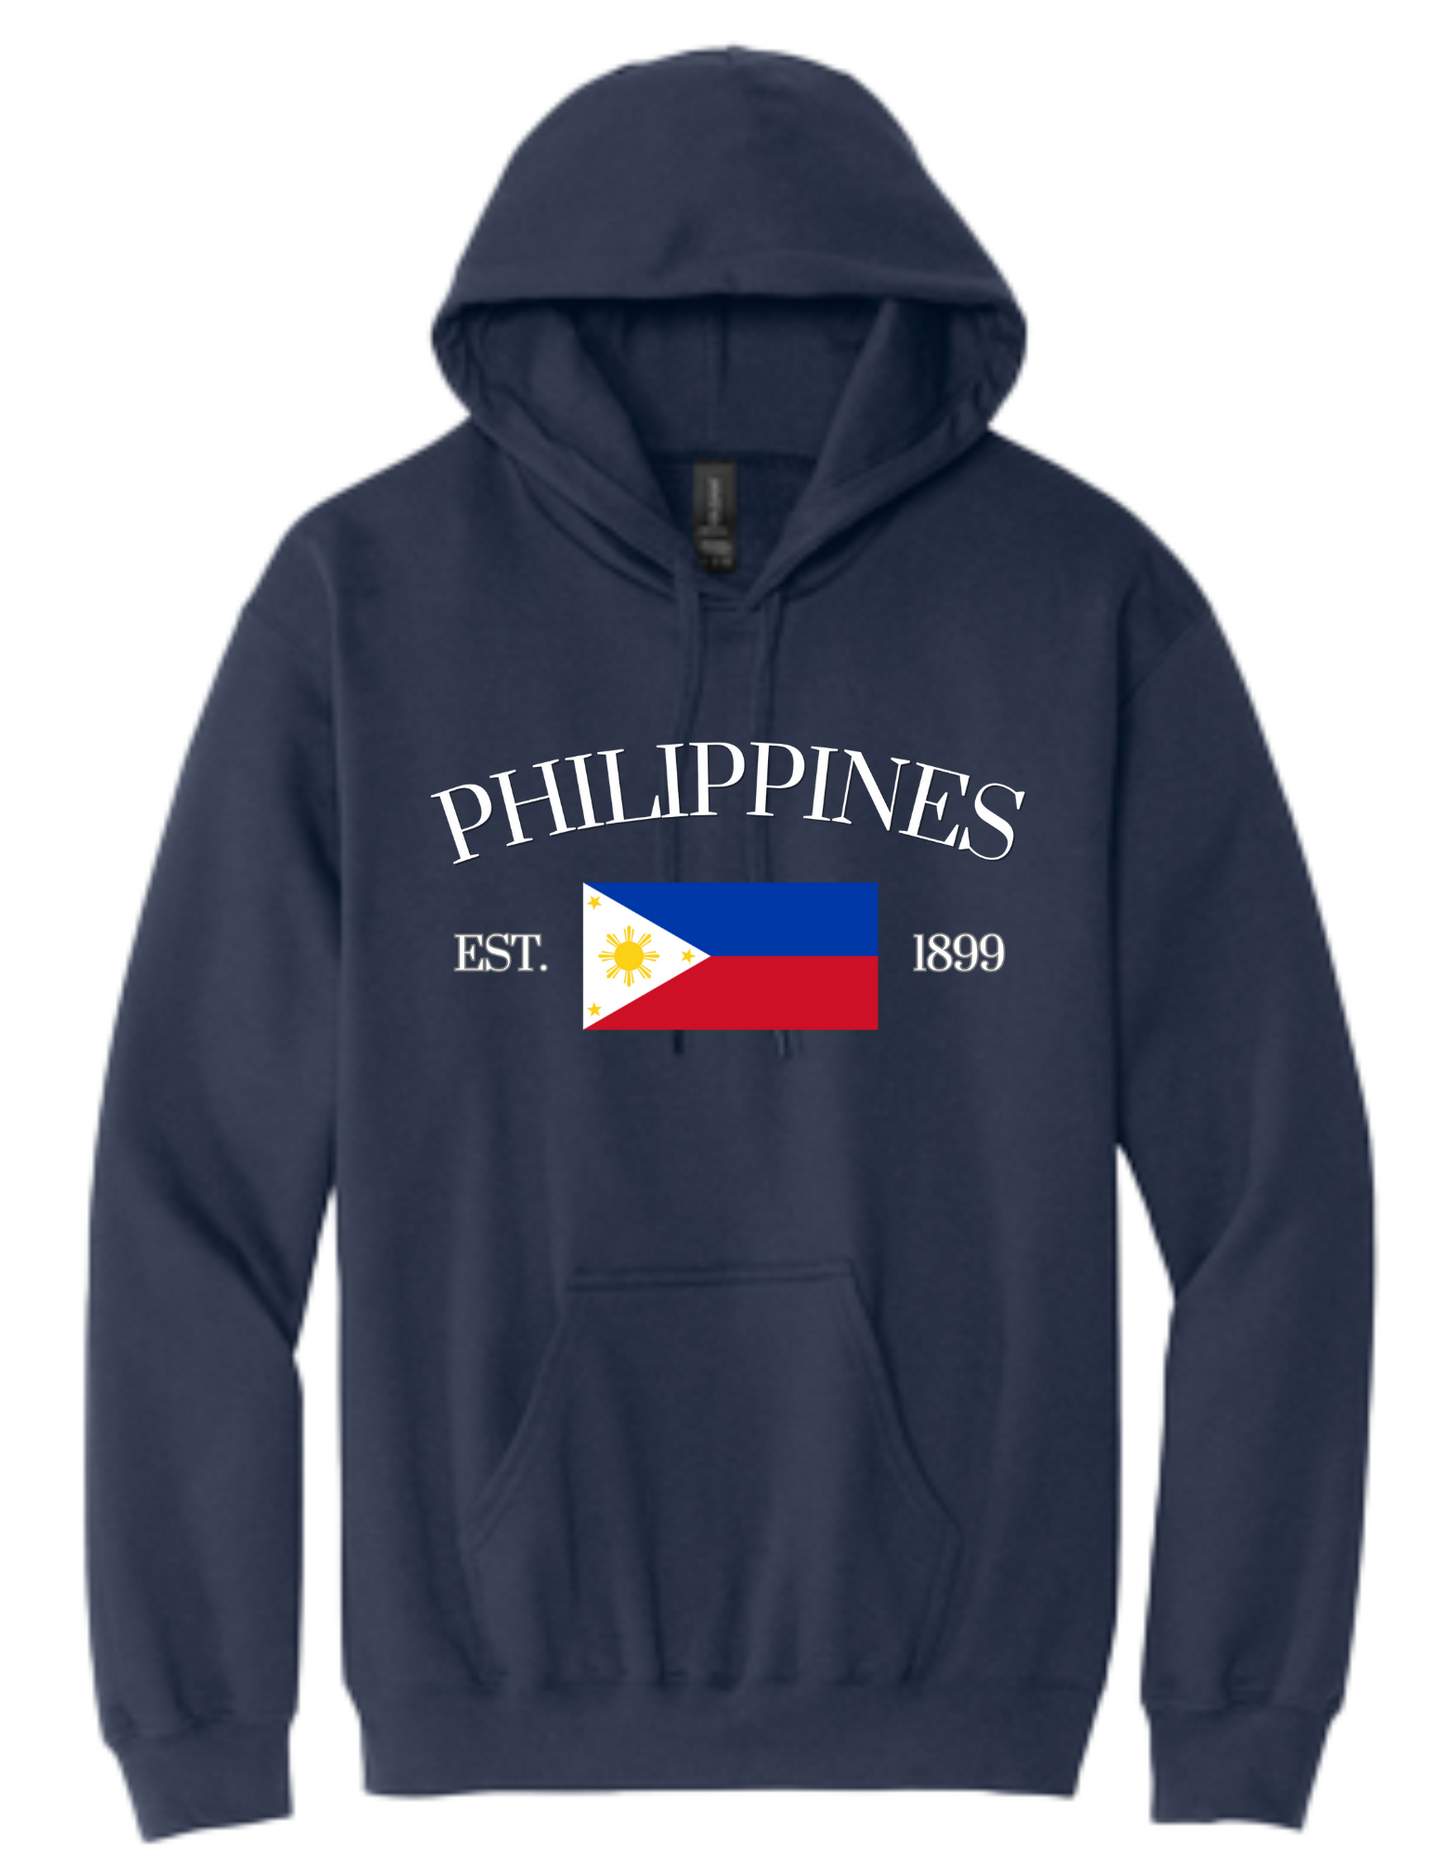 Philippines Established -